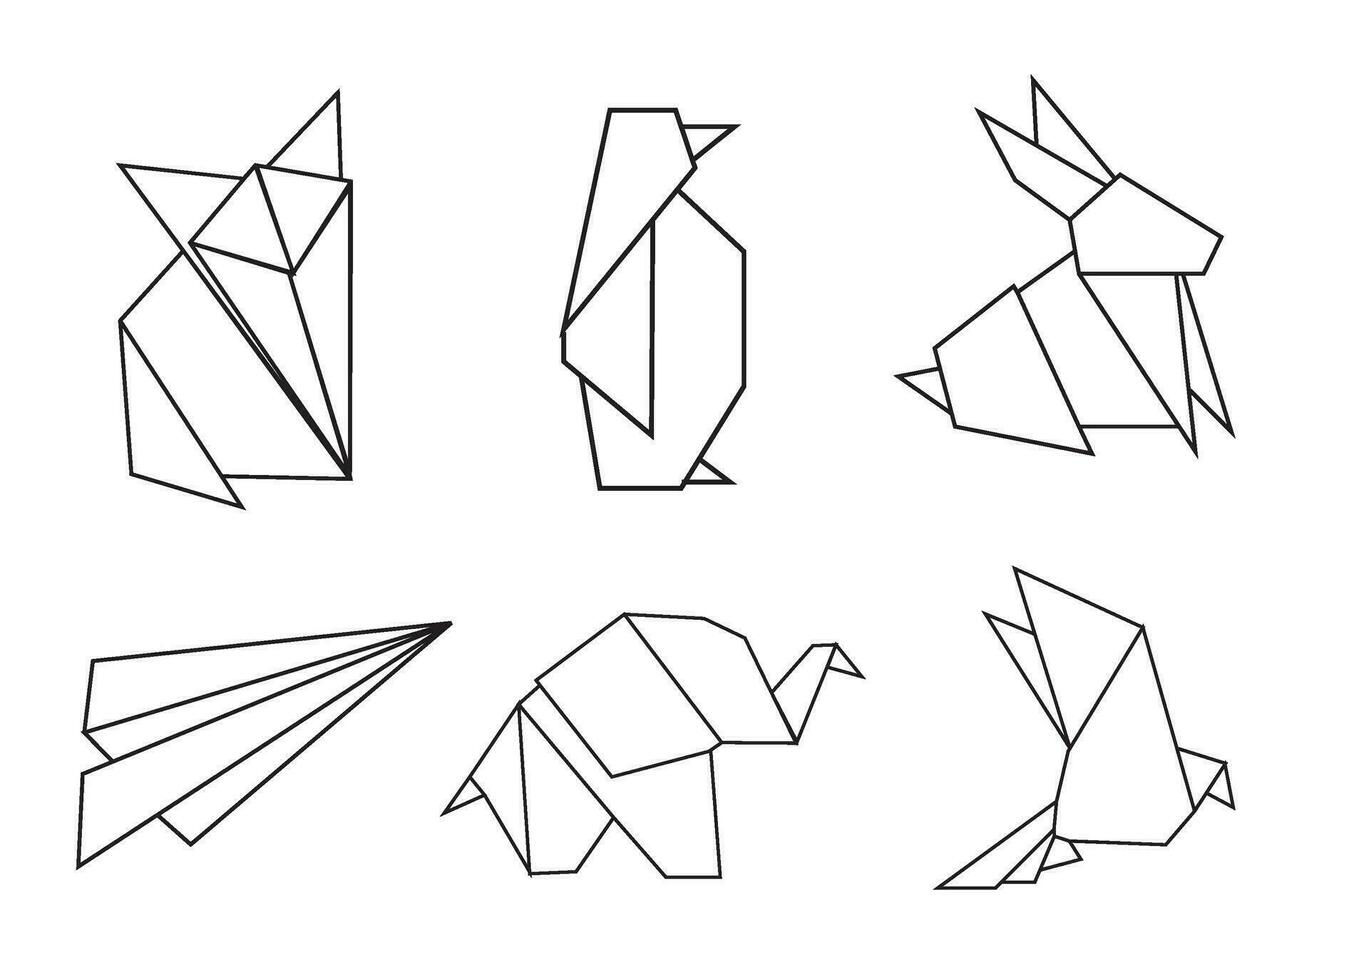 Origami animals vector illustration. Animal origami paper. Paper art illustration. Origami icon set pattern